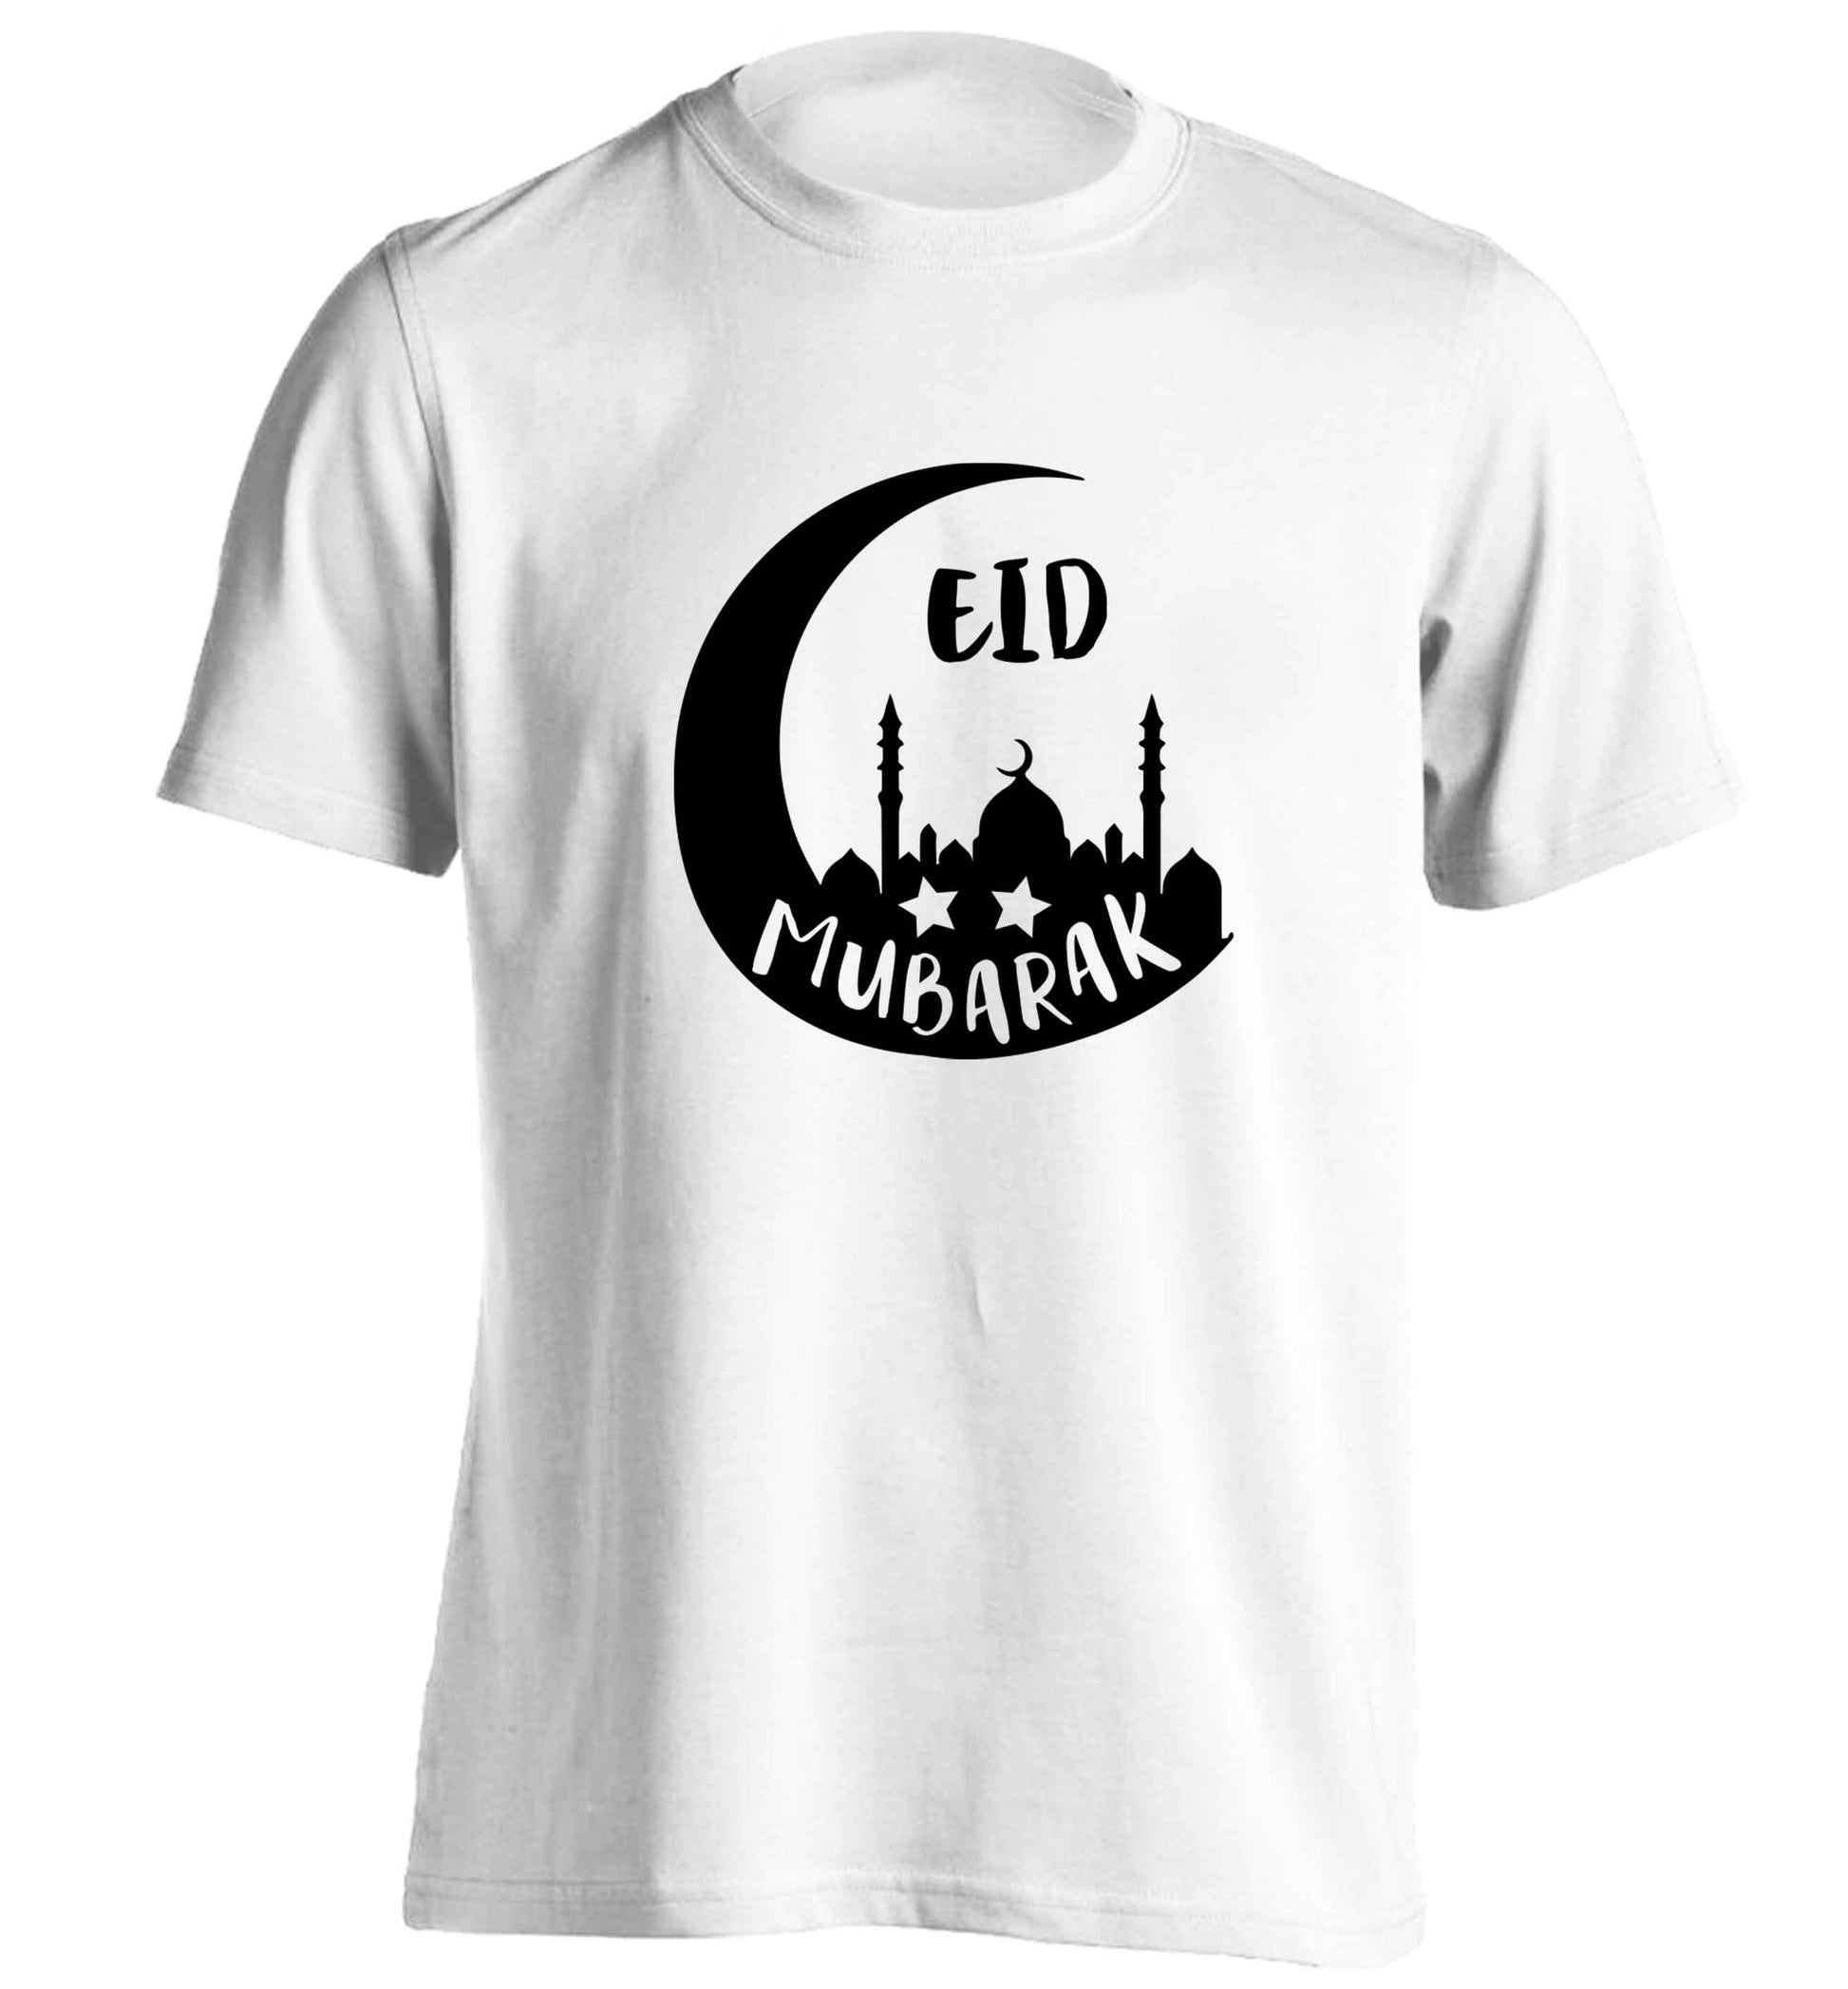 Eid mubarak adults unisex white Tshirt 2XL